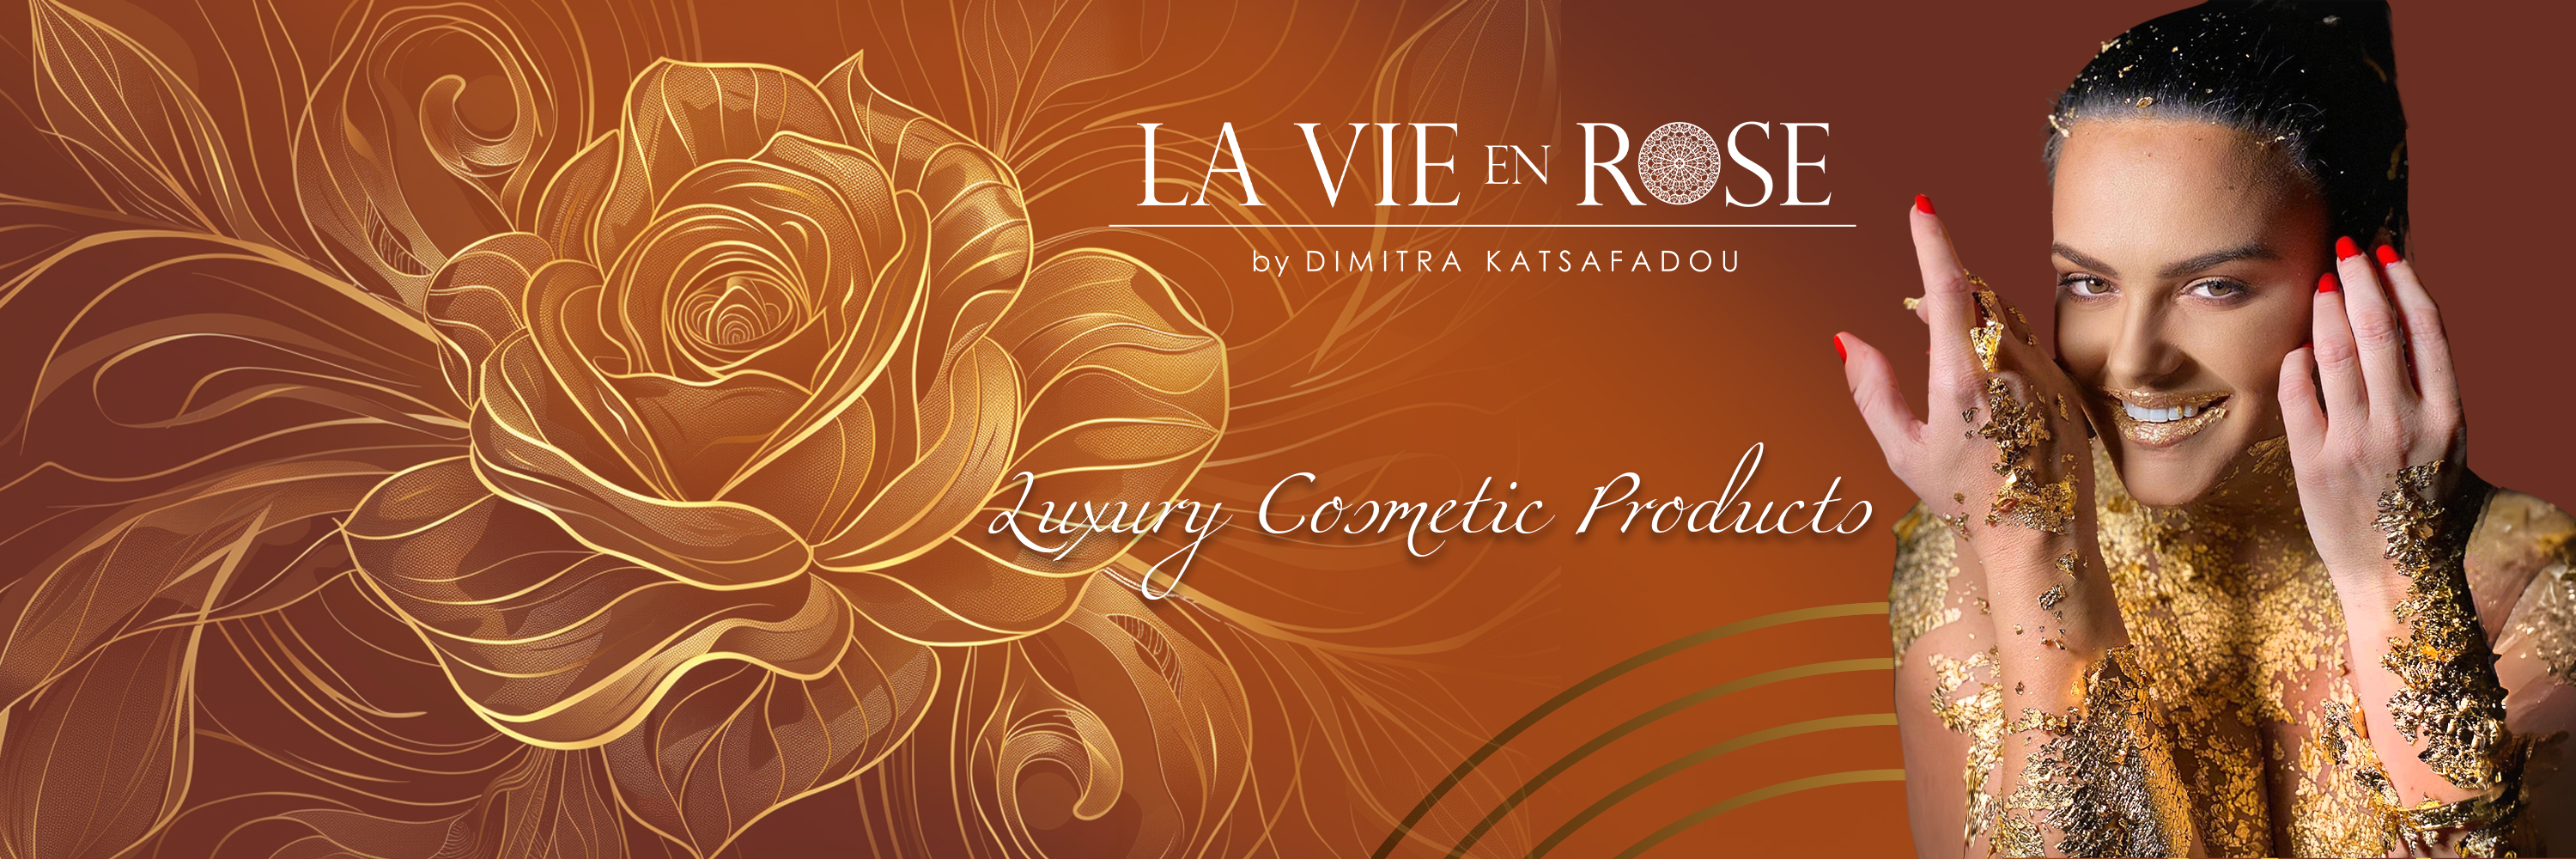 Luxury Products La Vie en Rose